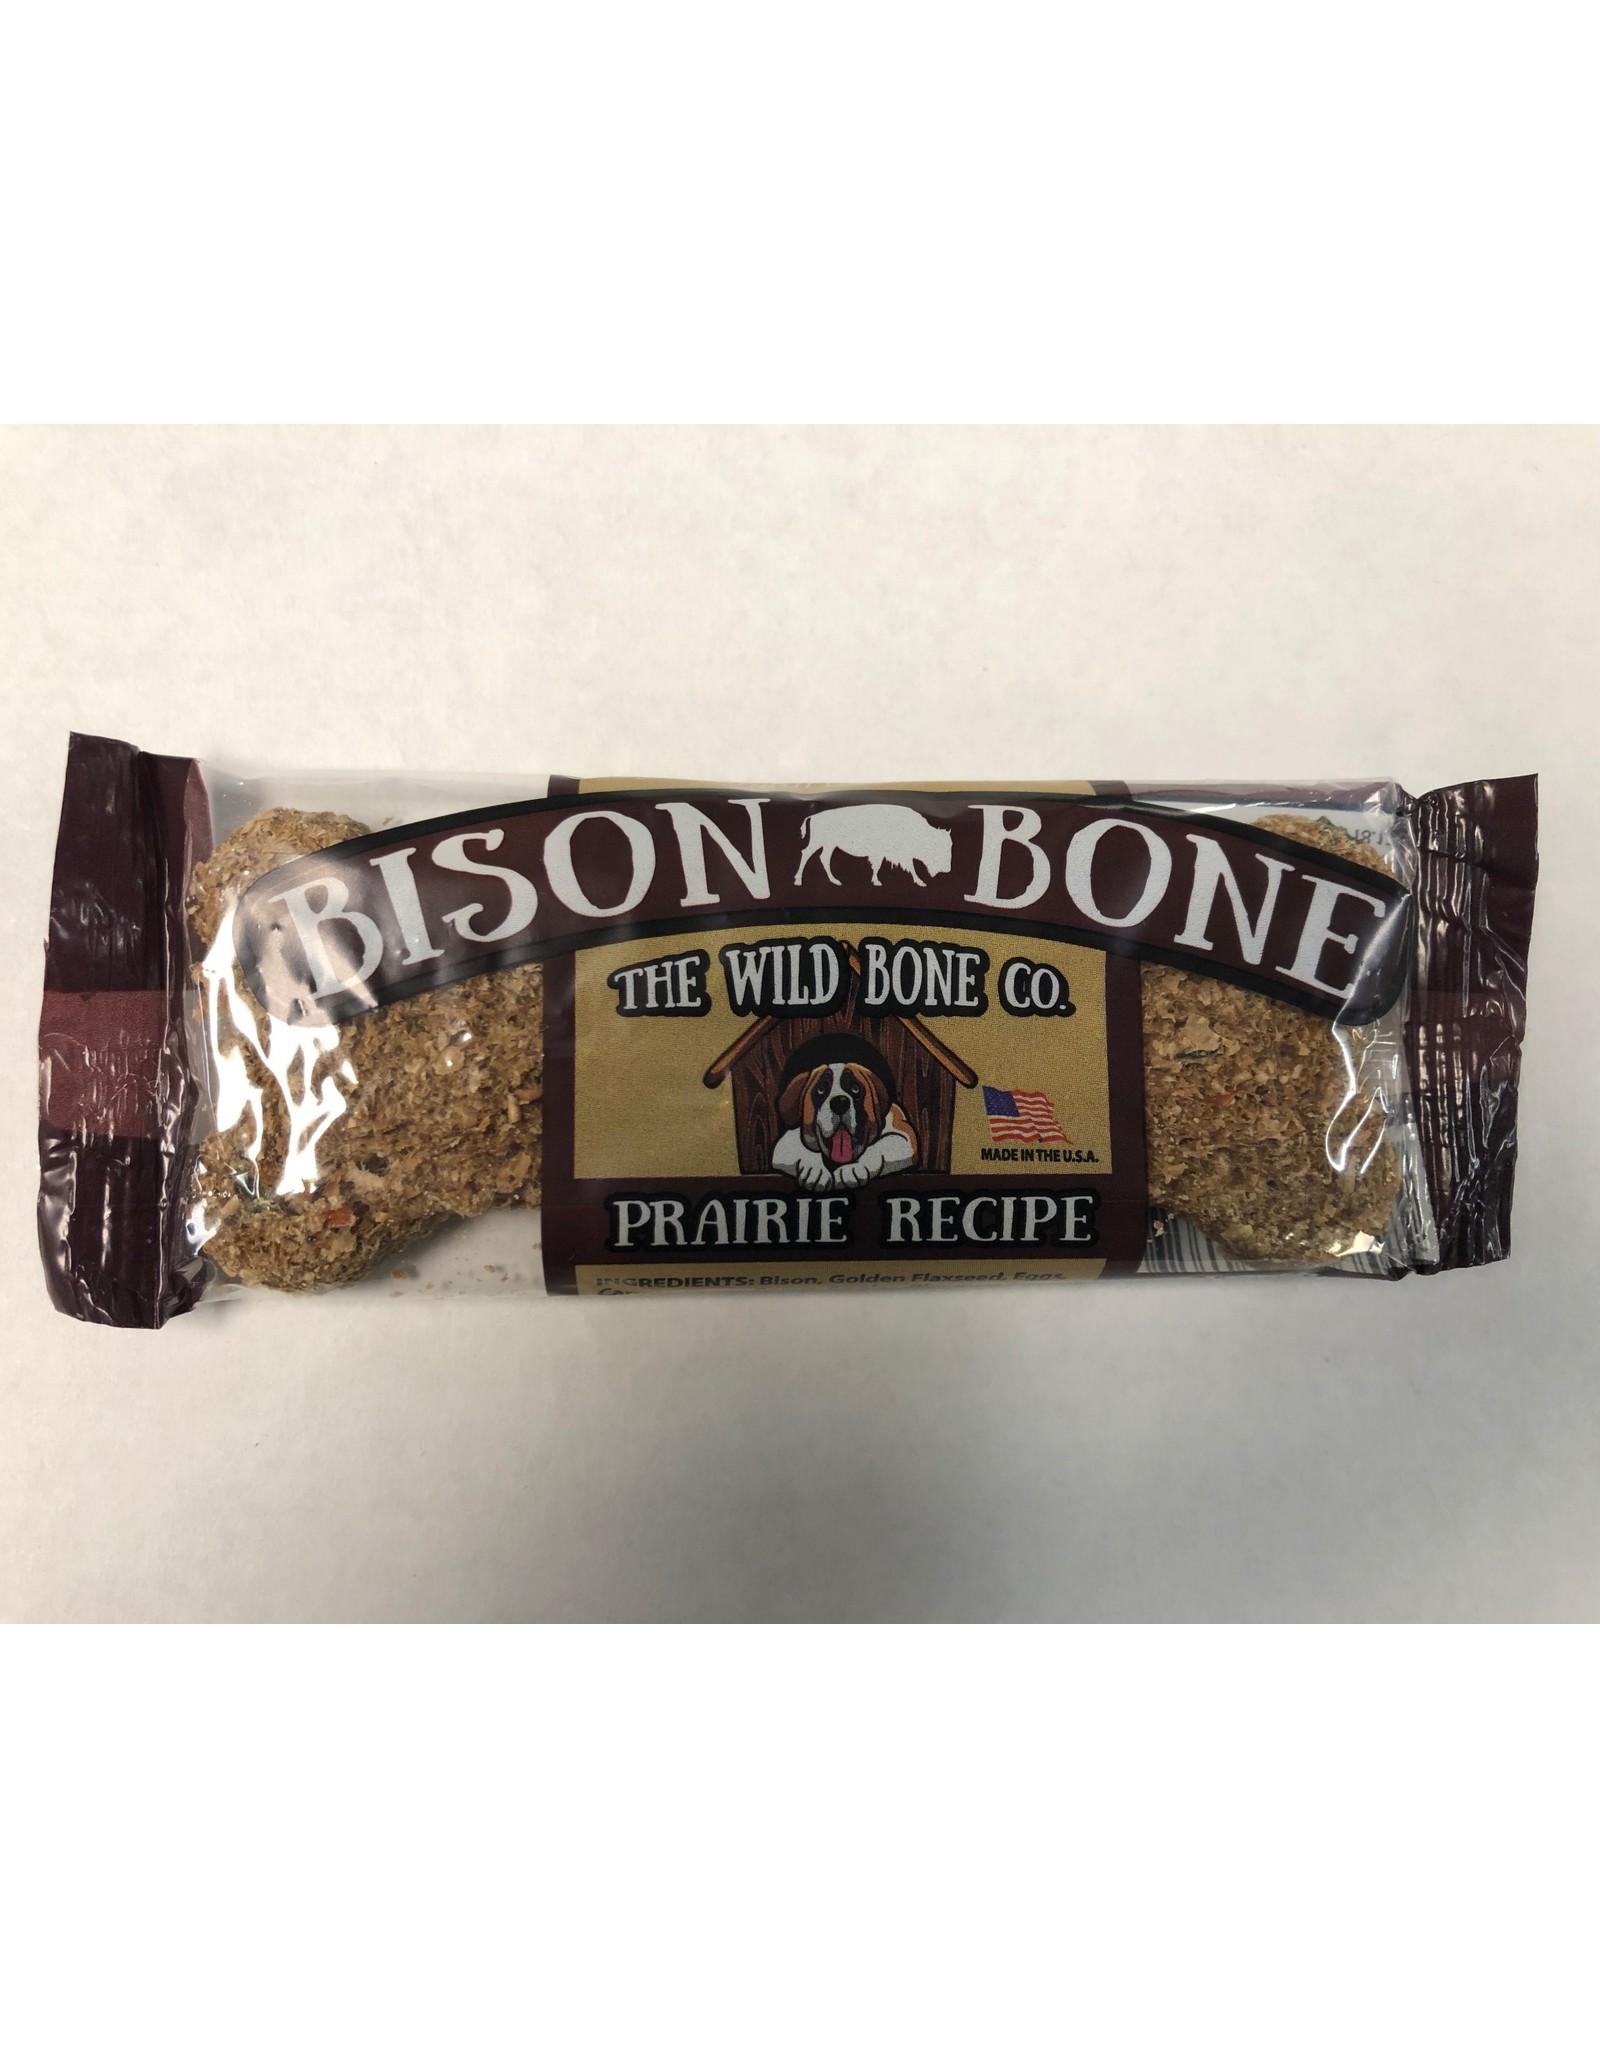 The Wild Bone Co. The Wild Bone Co. Bison Bone Prairie Recipe 1oz